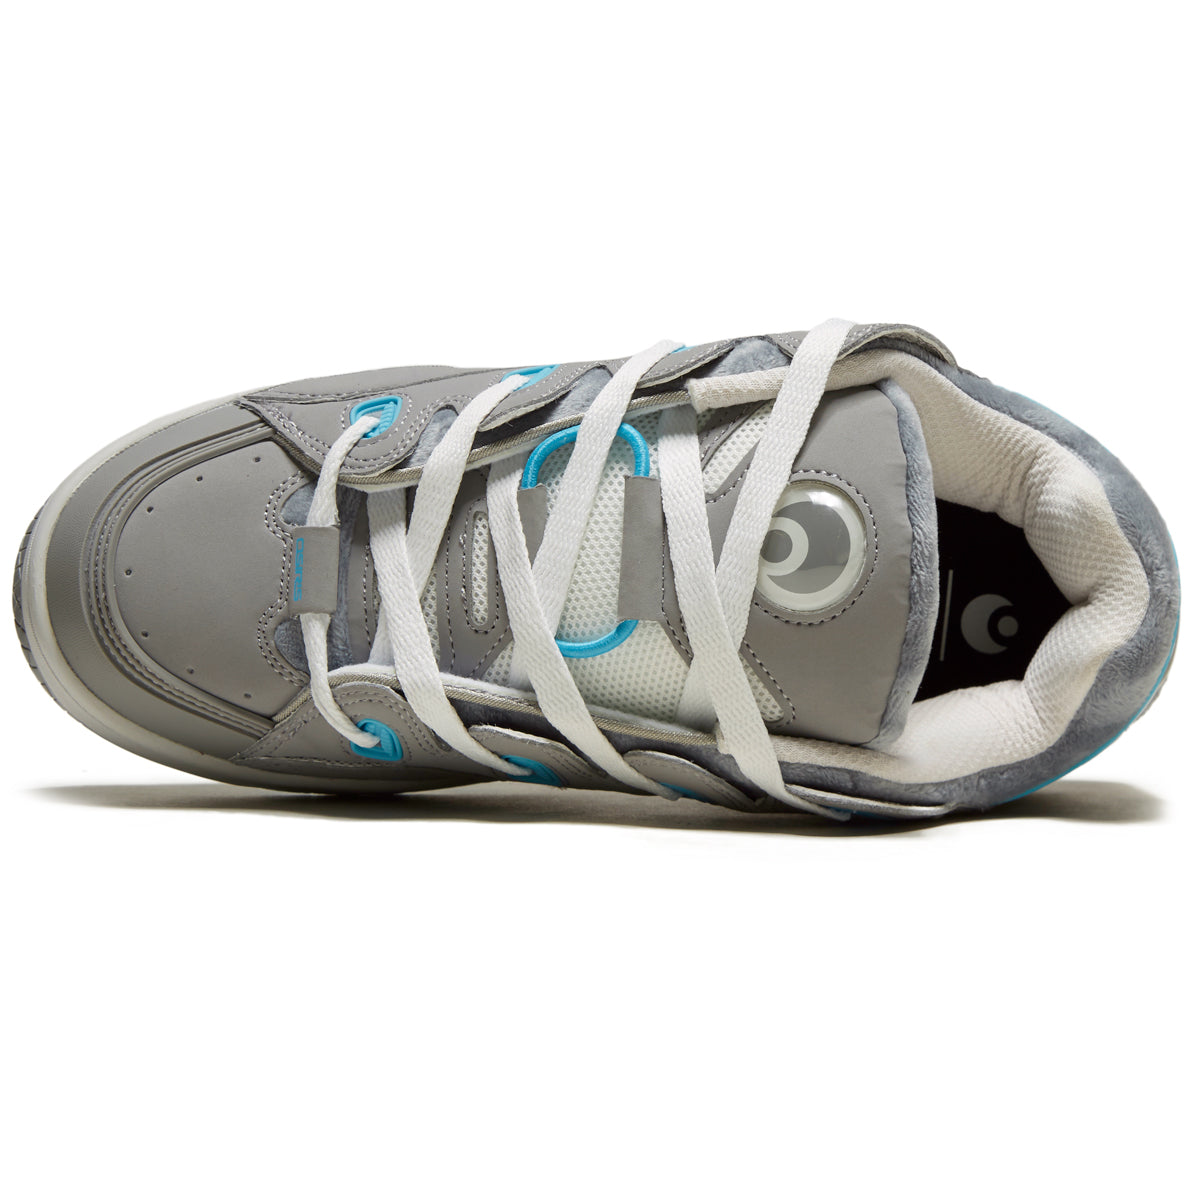 Osiris D3 Og Shoes - Grey/Blue/White image 3